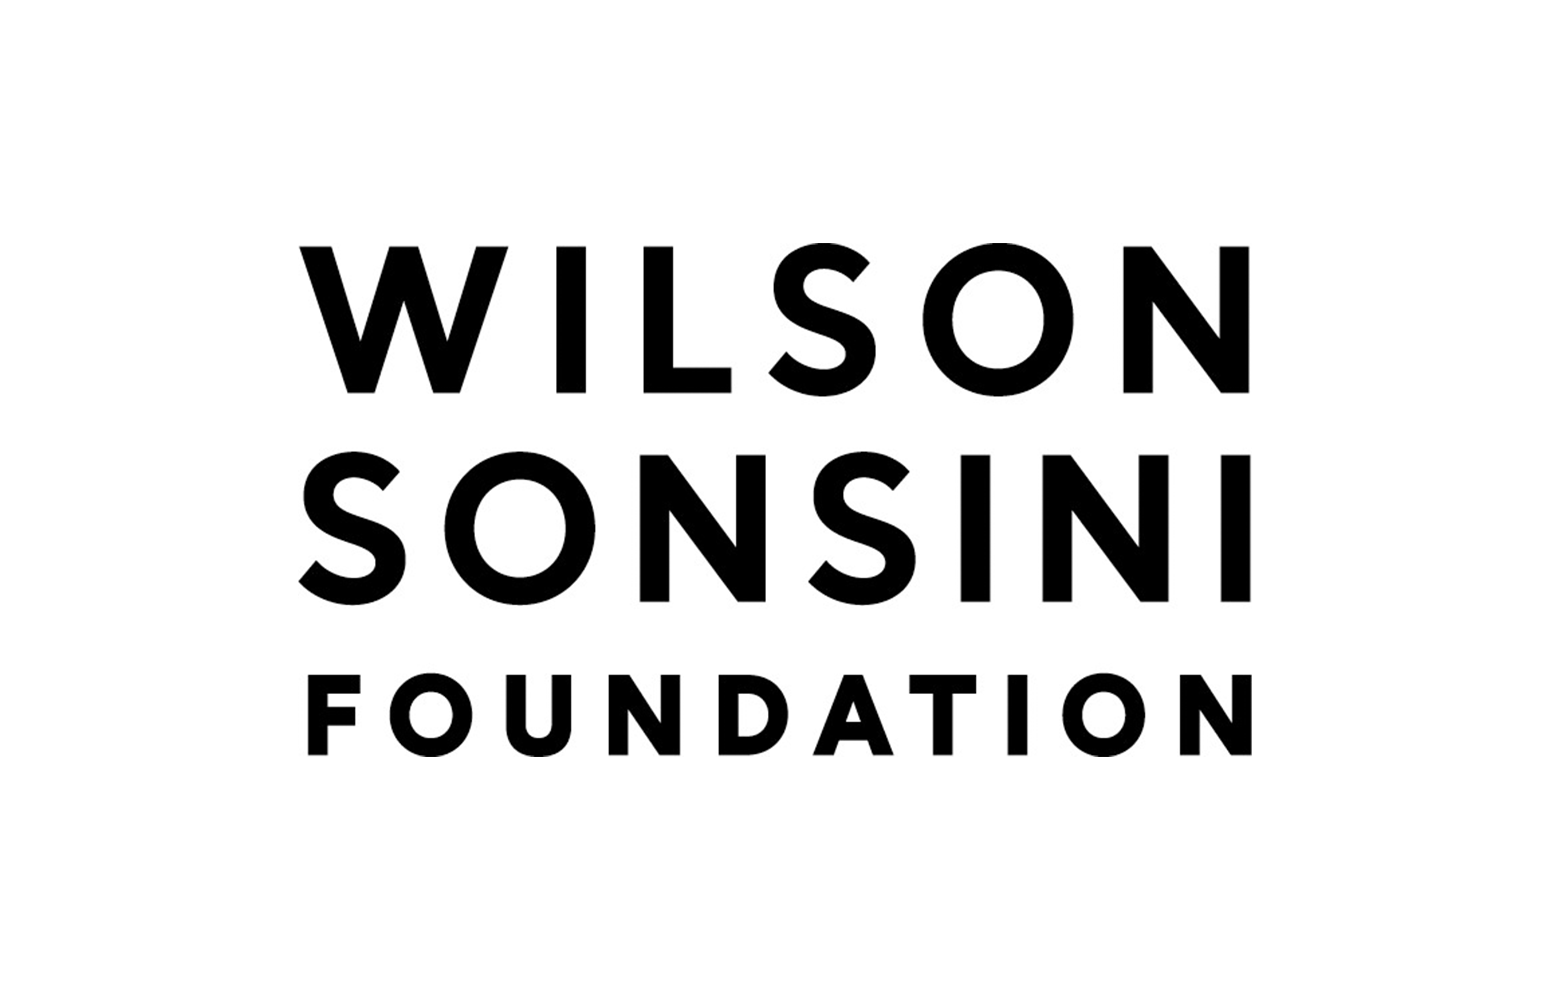 Wilson Sonsini